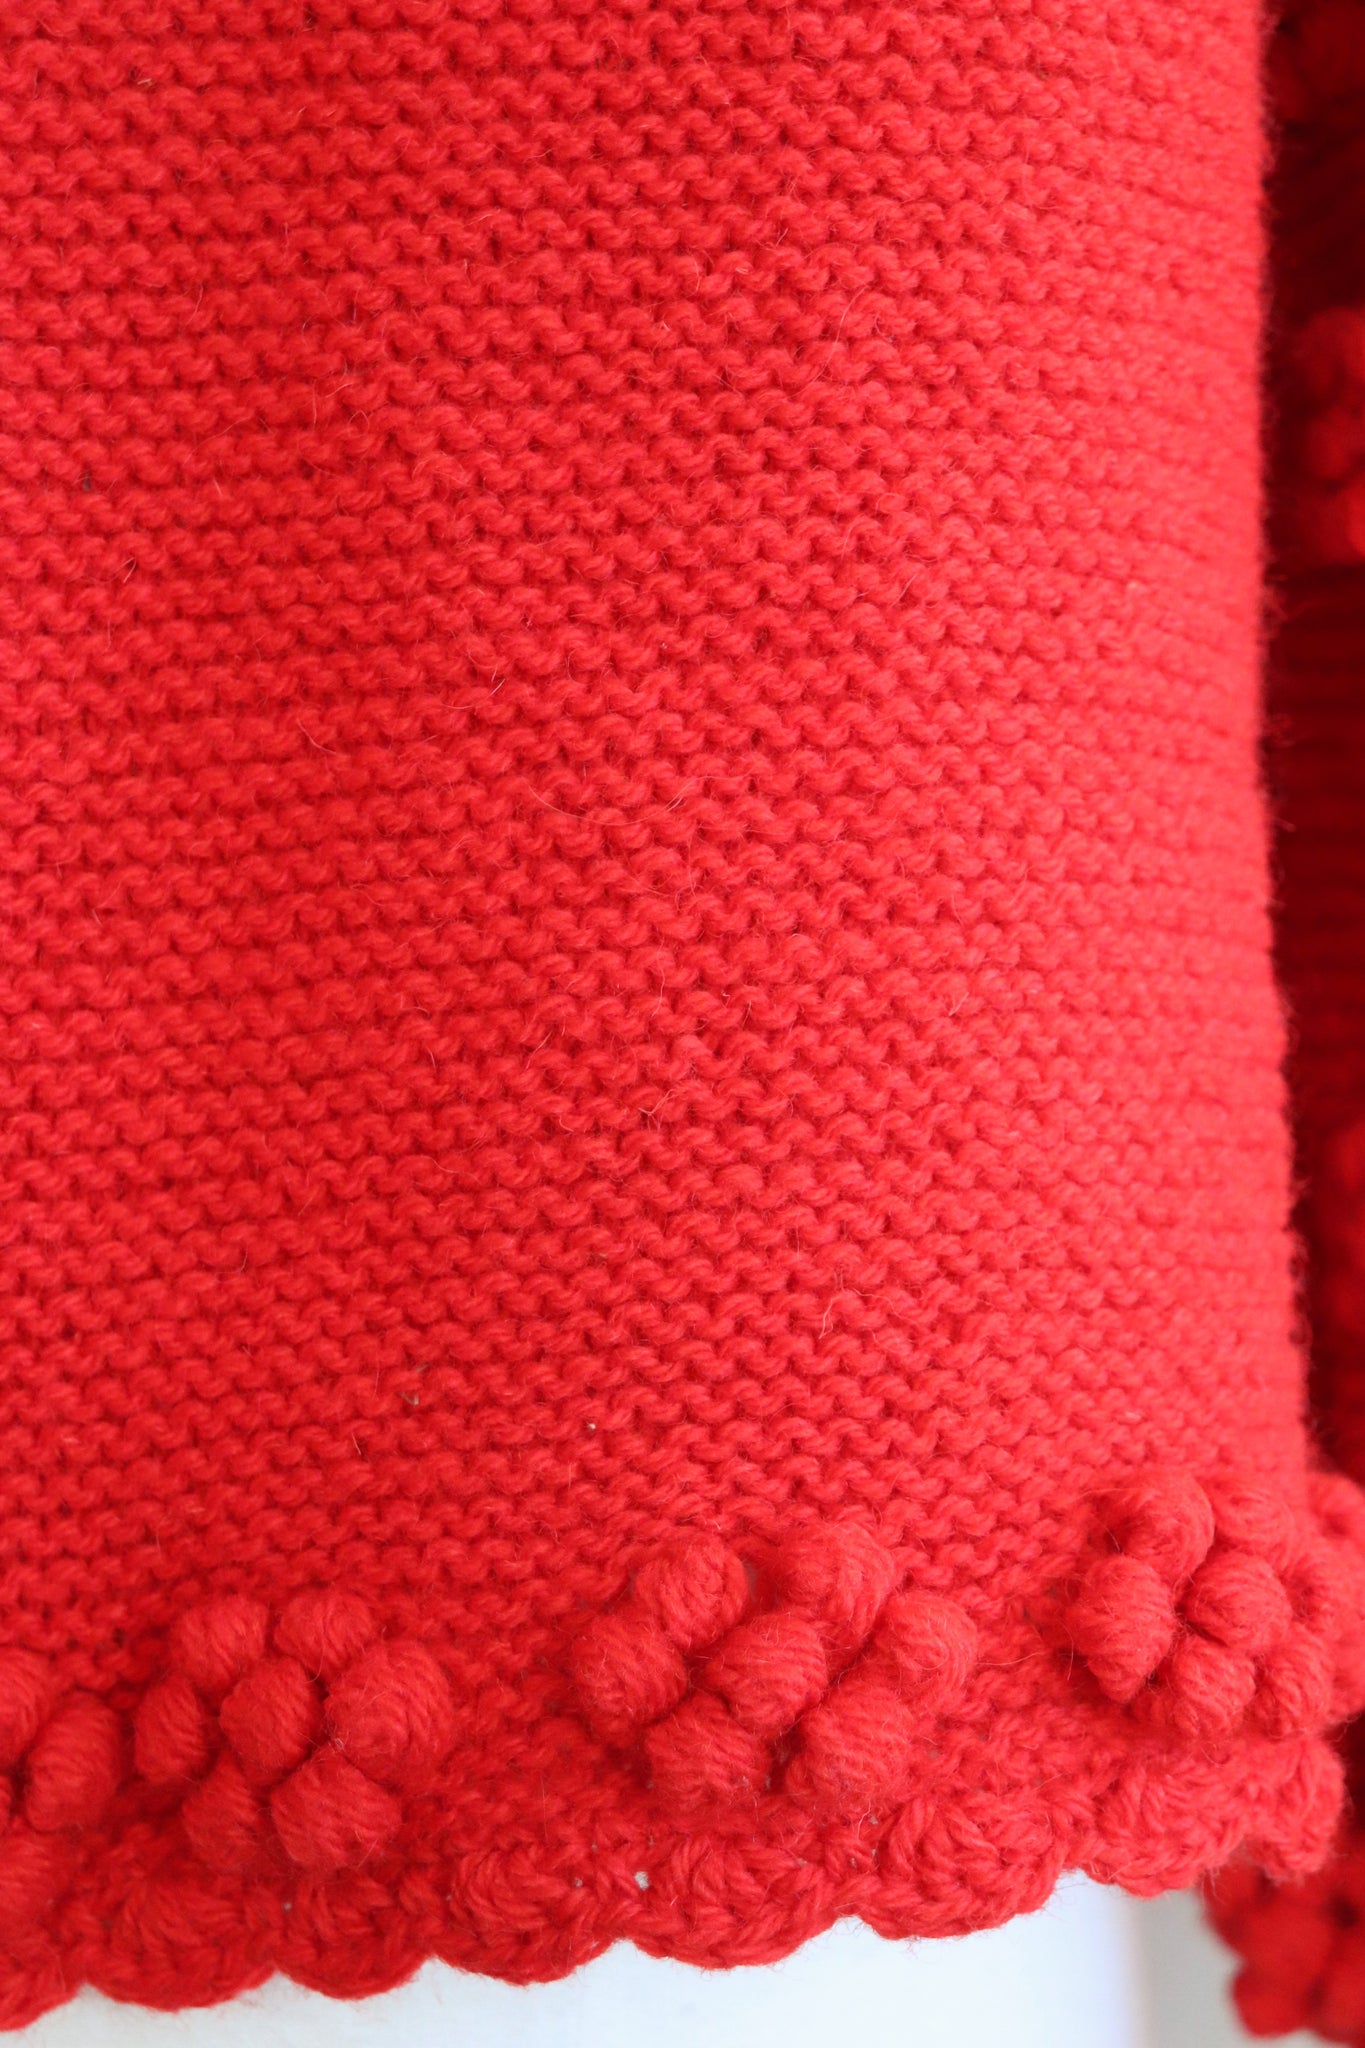 Austrian Hand knit Puff Sleeve Pon Pon Cardigan Red